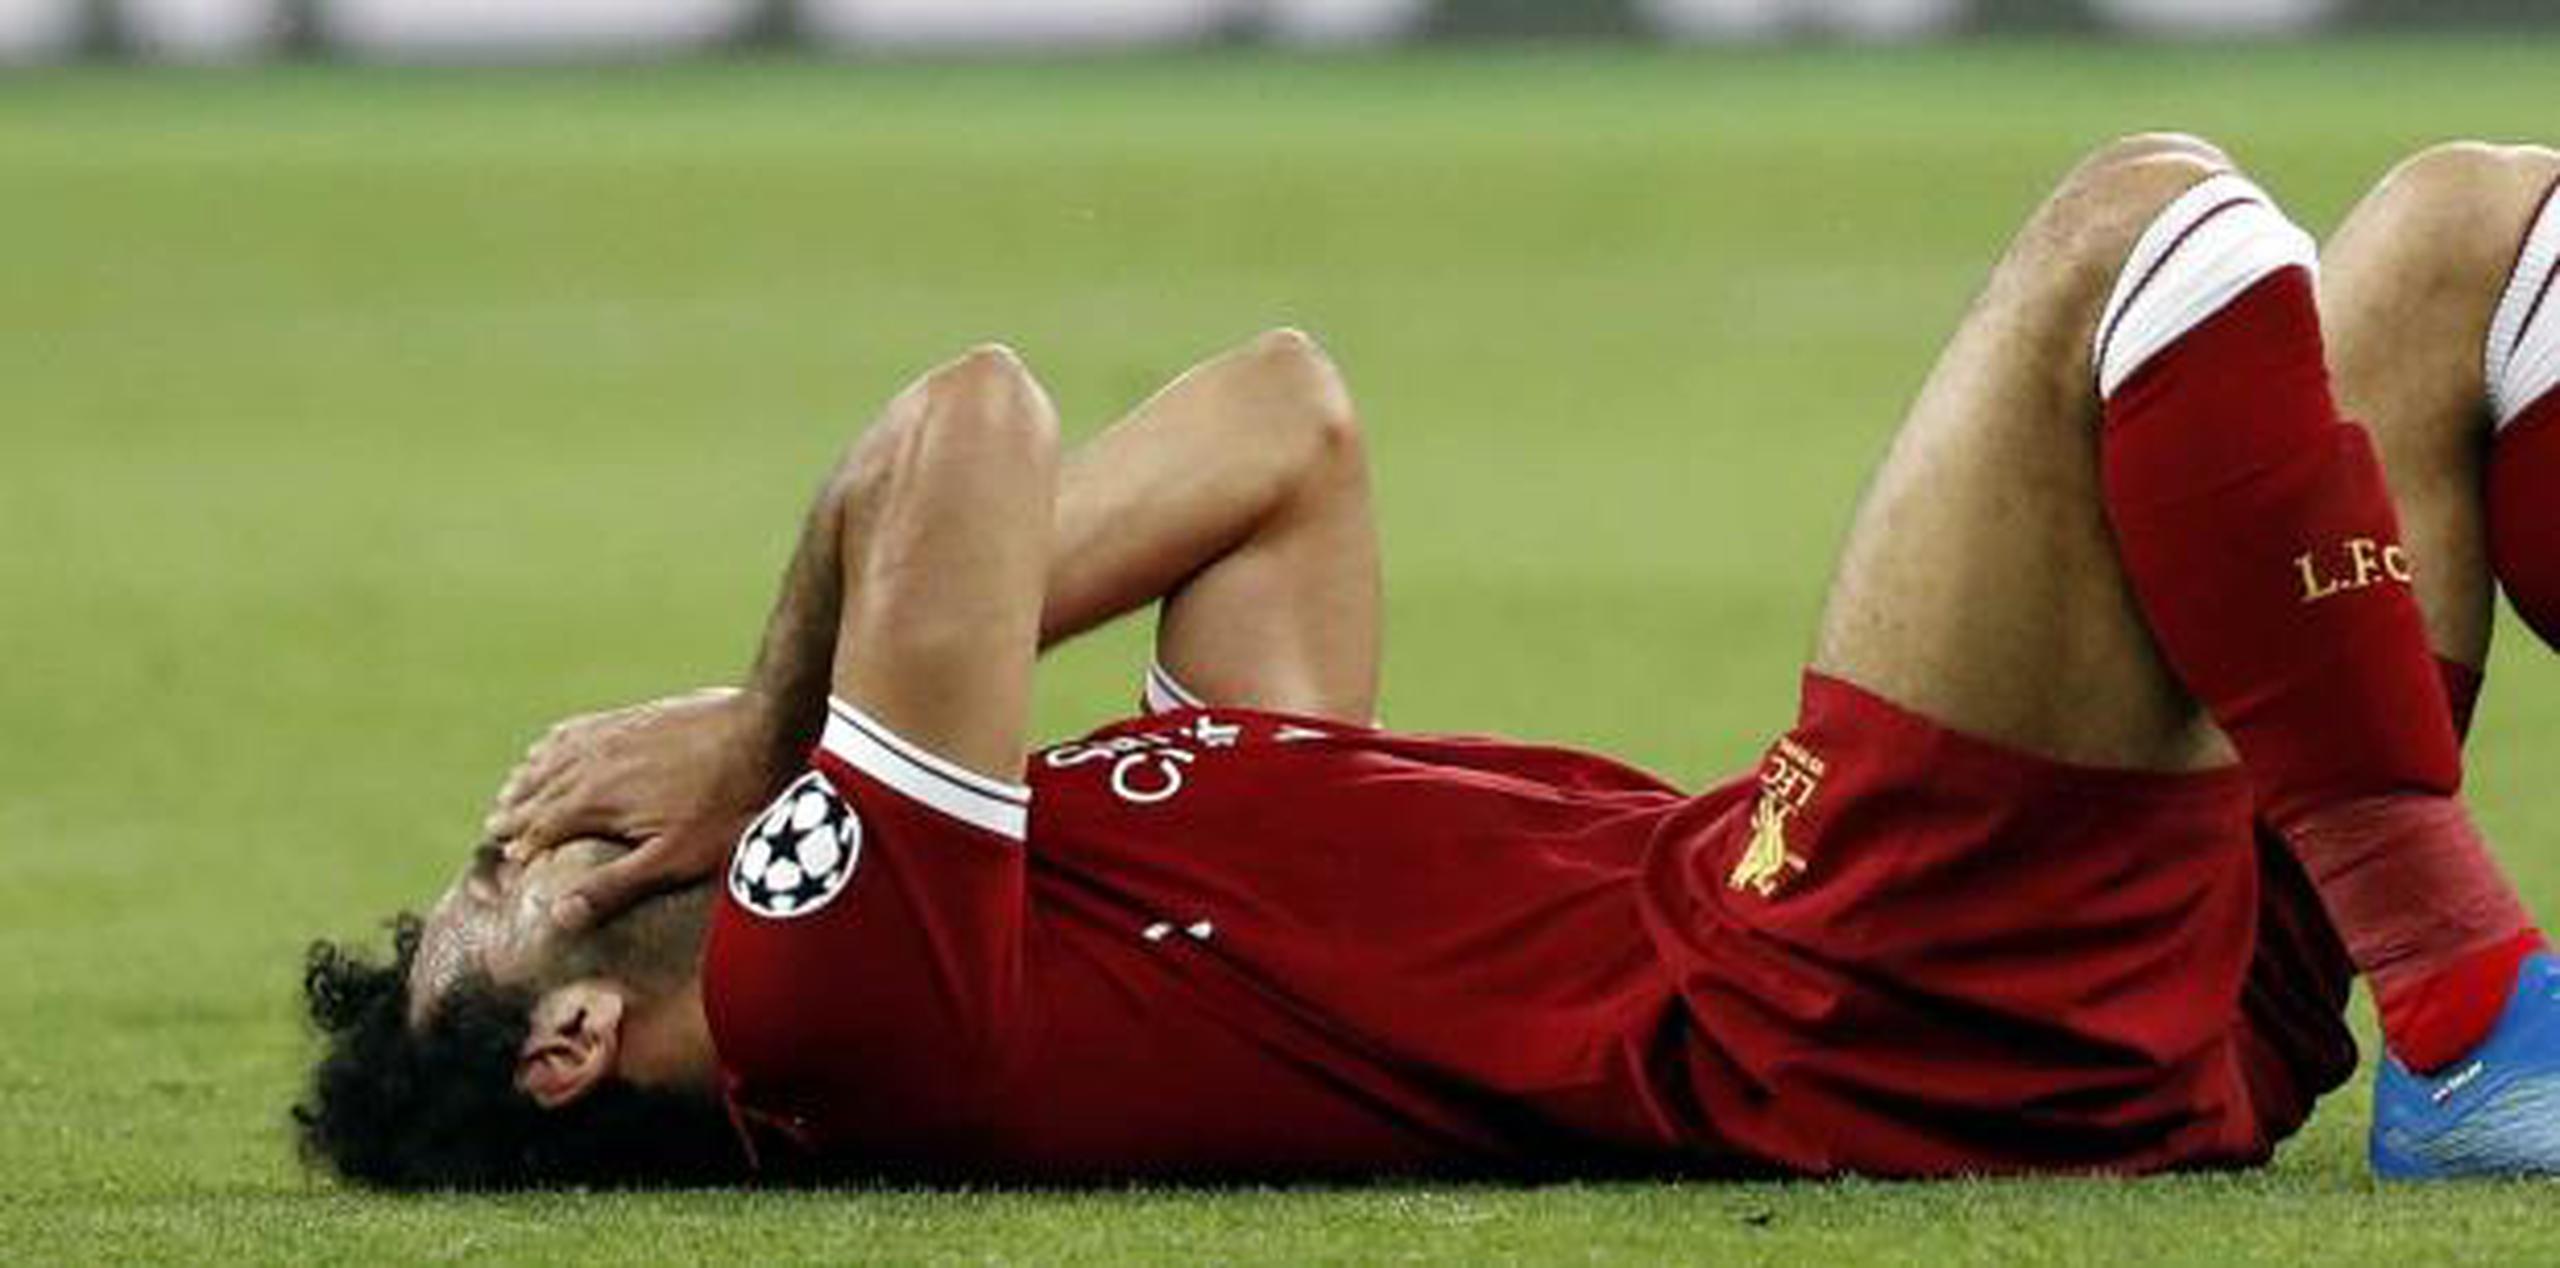 Salah metió 44 goles para el Liverpool en la mejor temporada de su carrera. (AP / Pavel Golovkin)